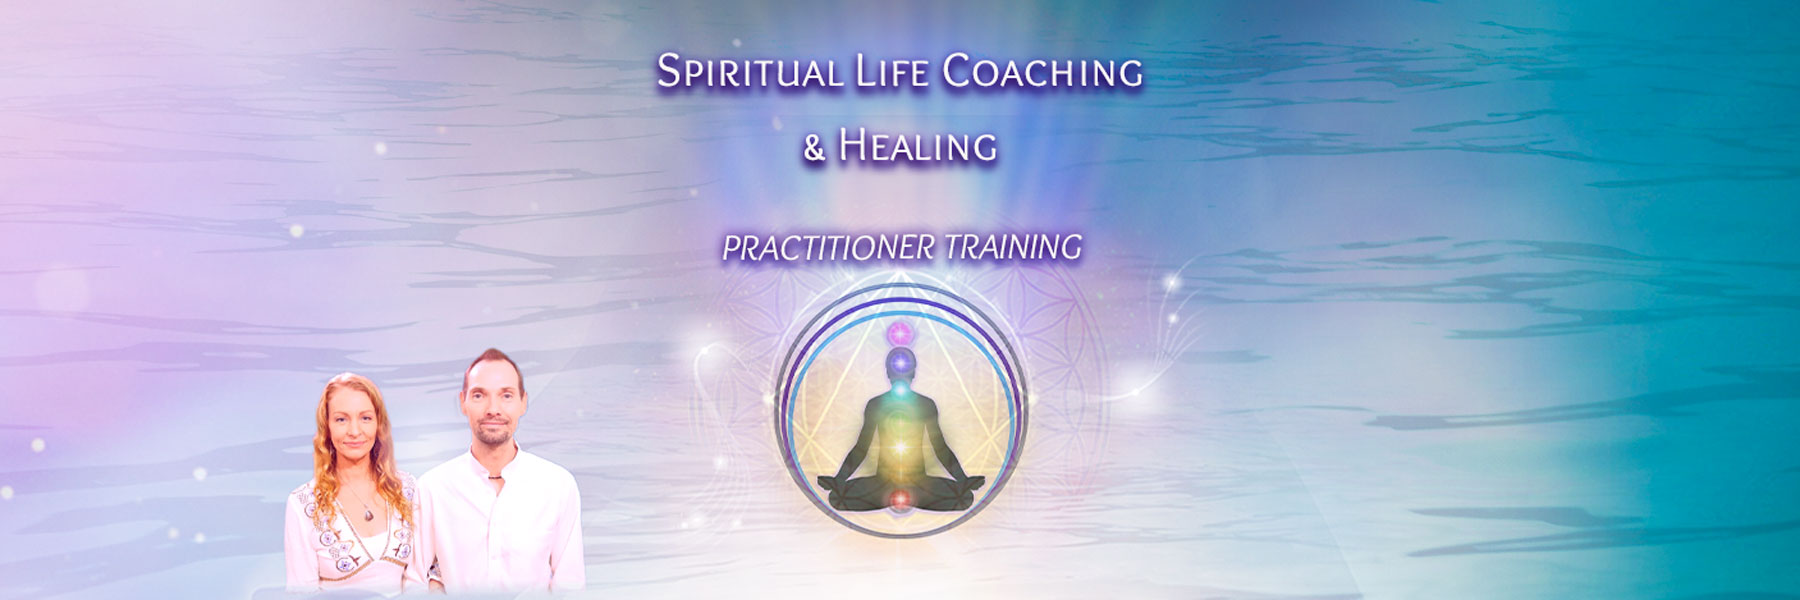 Spiritual Life Coaching & Healing - Practitioner Training